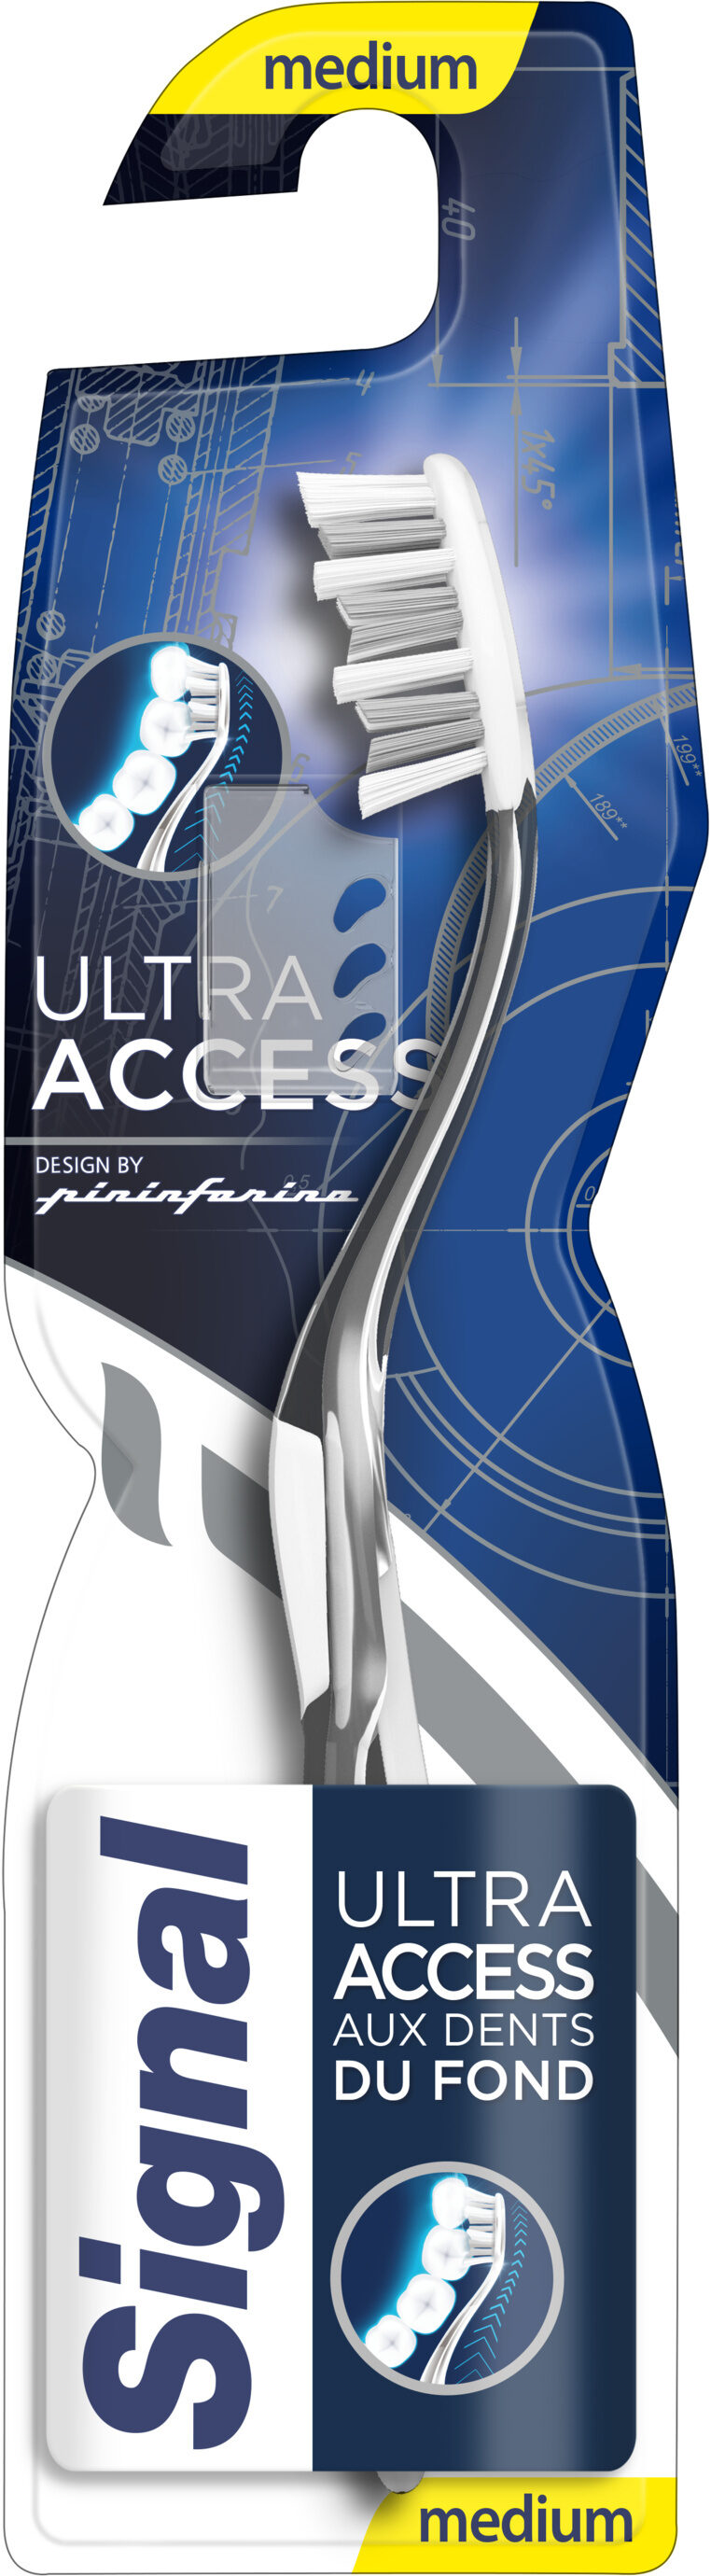 Signal Brosse à Dents Ultra Access Medium x1 - Product - fr